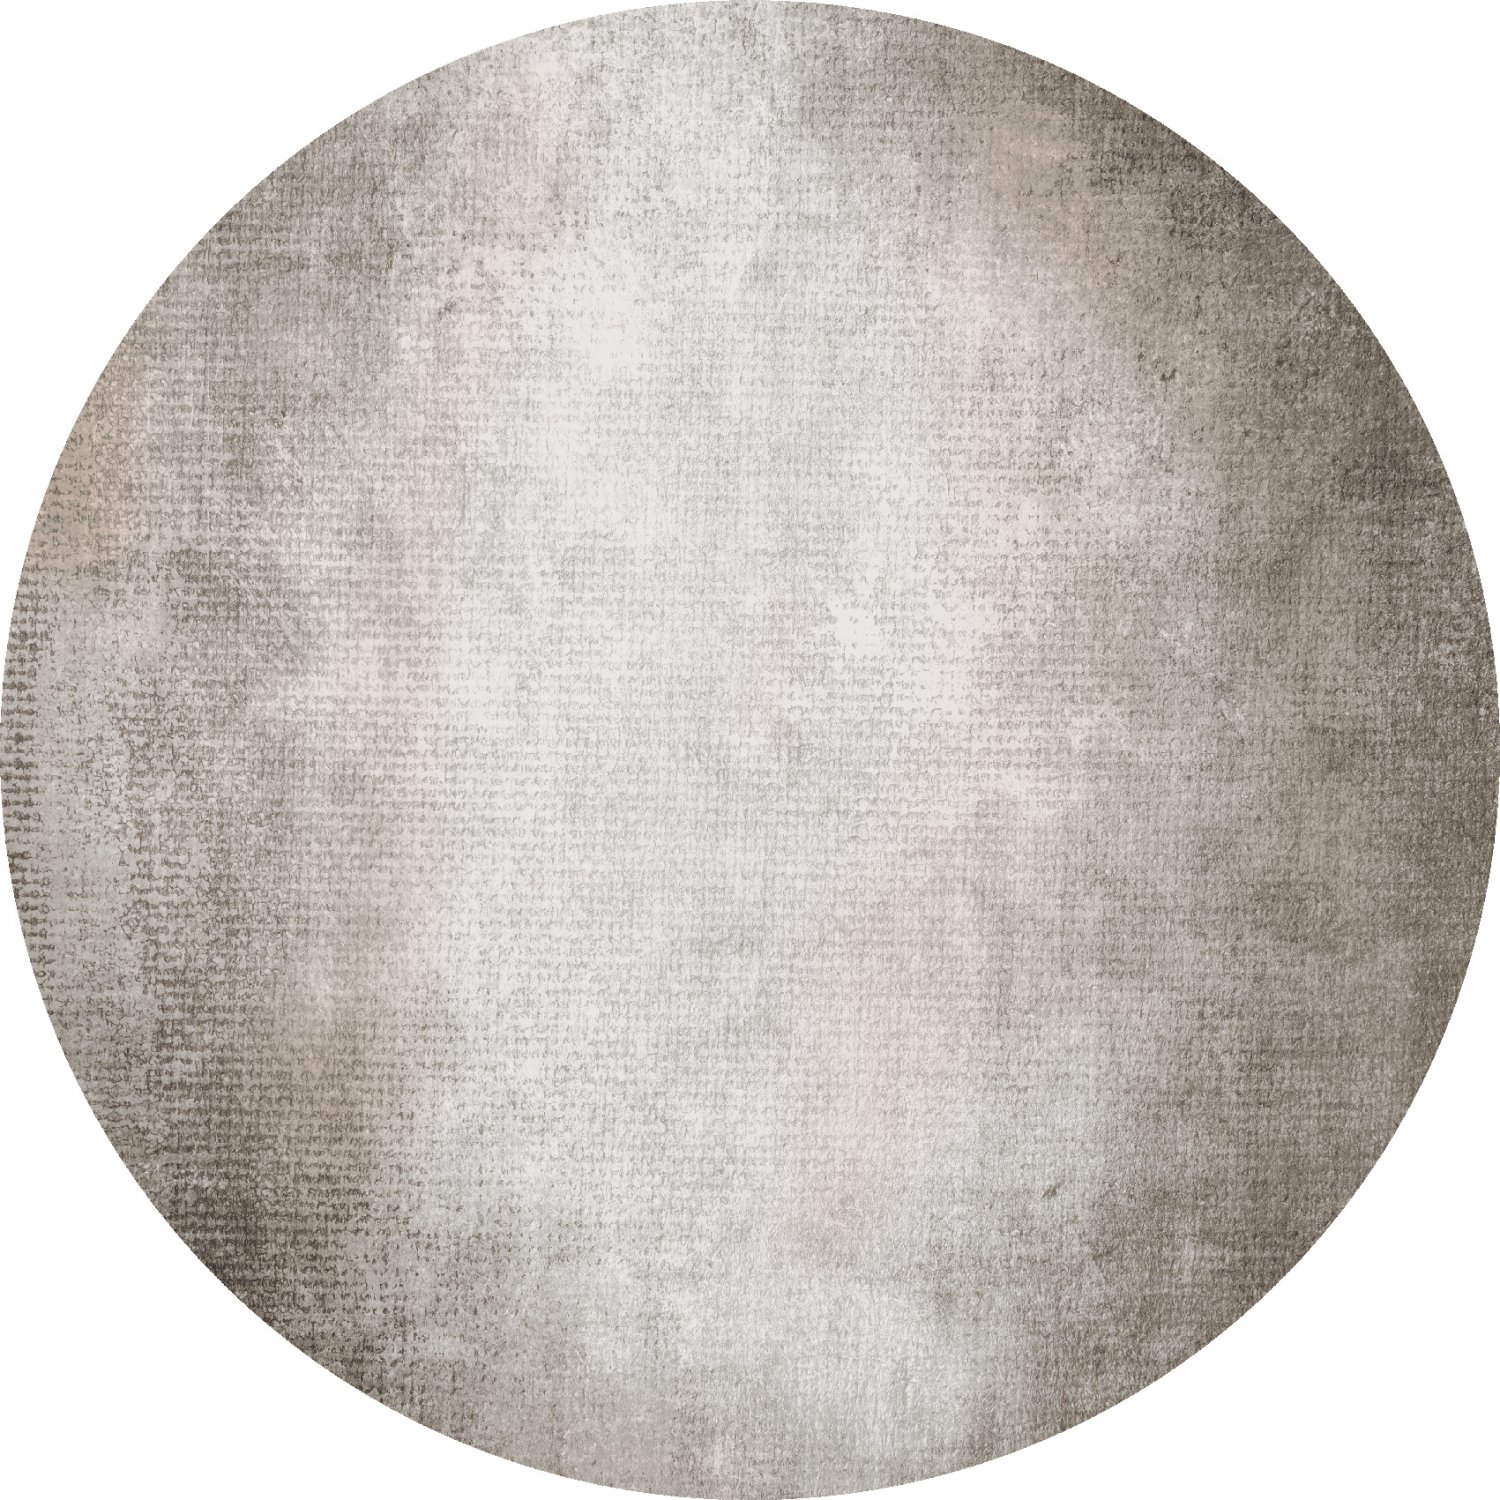 Round rug - Riano (grey)